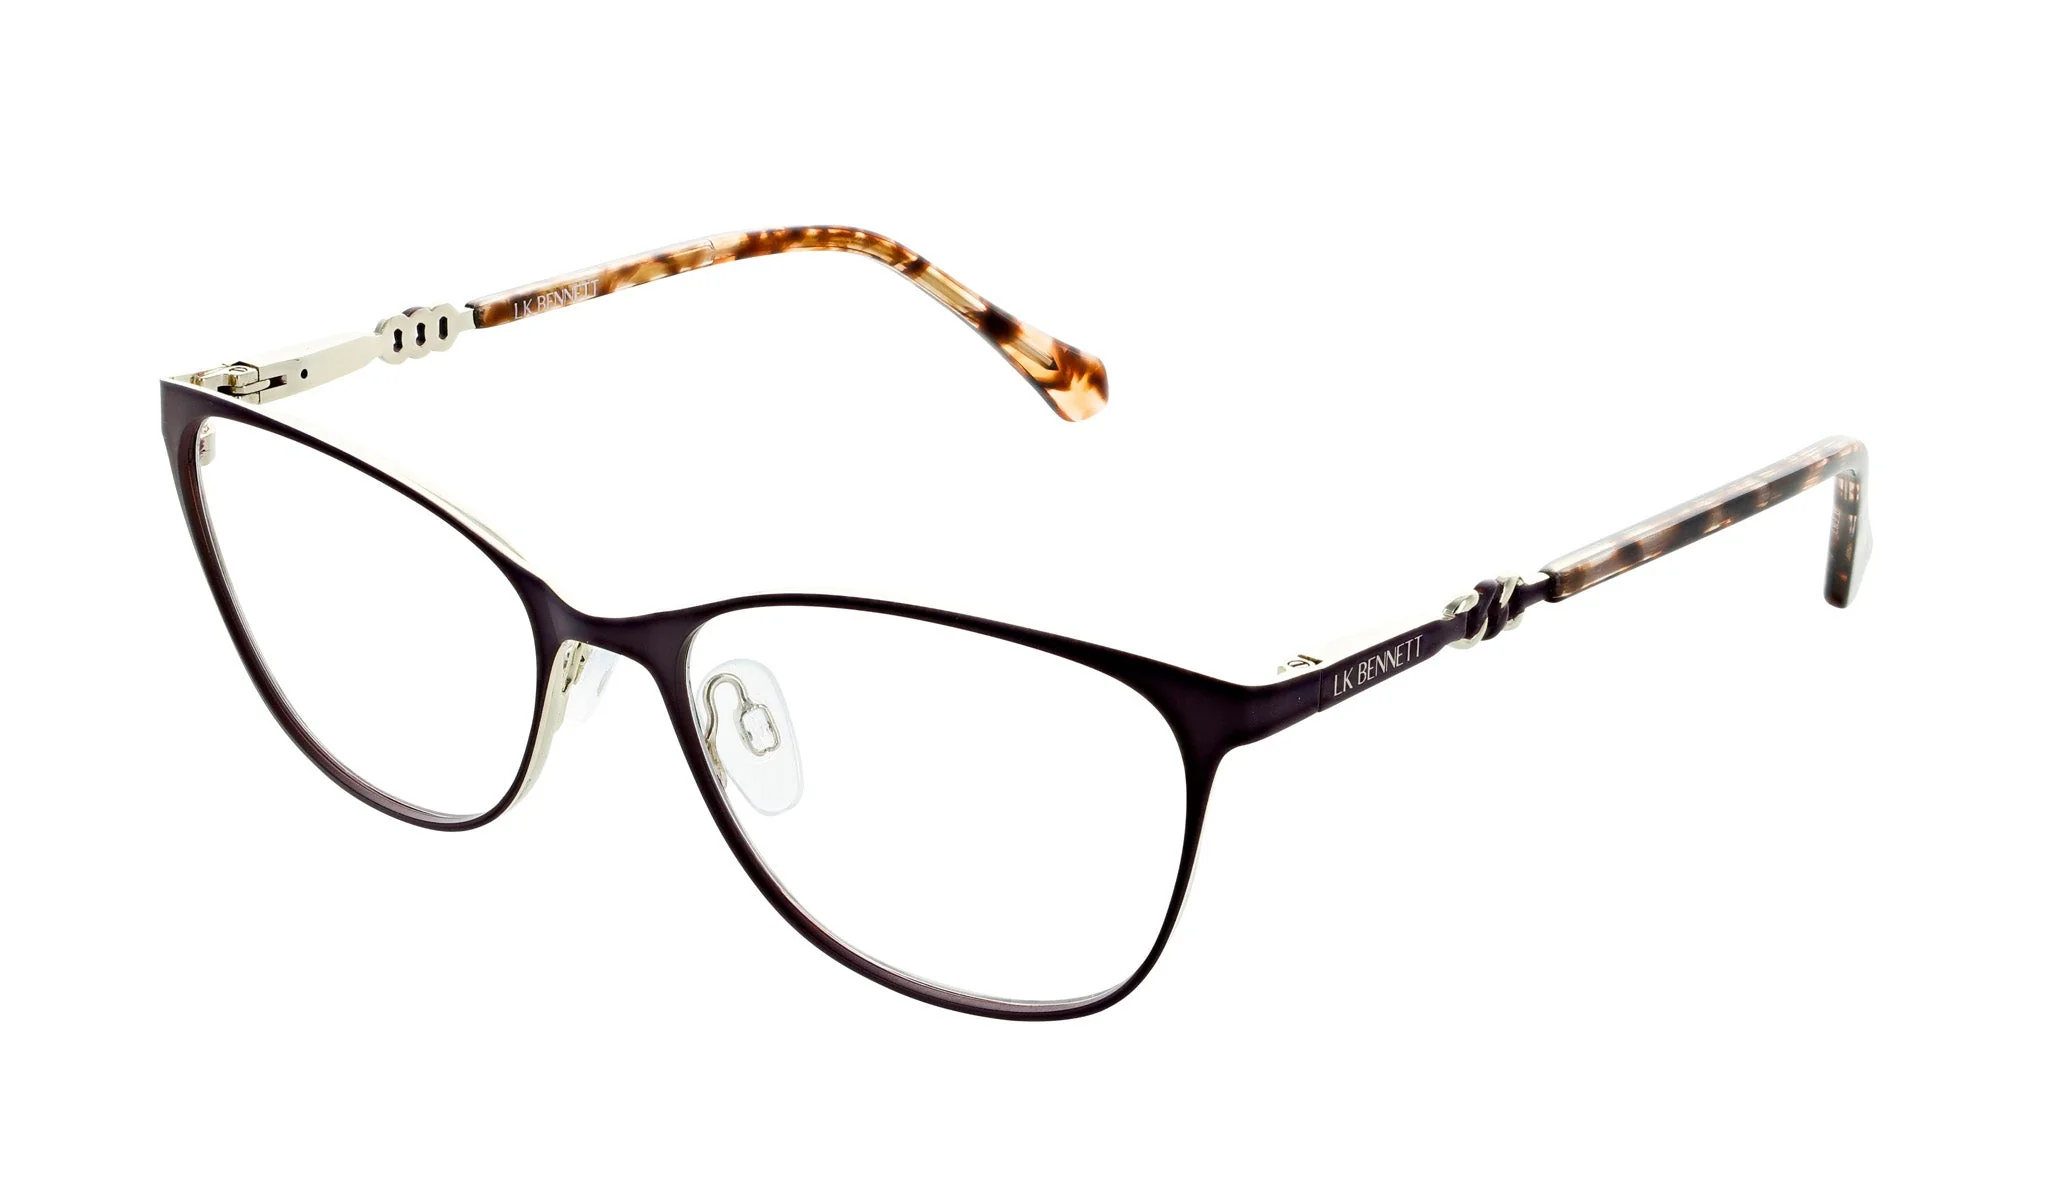 L.K.BENNETT 83 - Brown and White Opticians